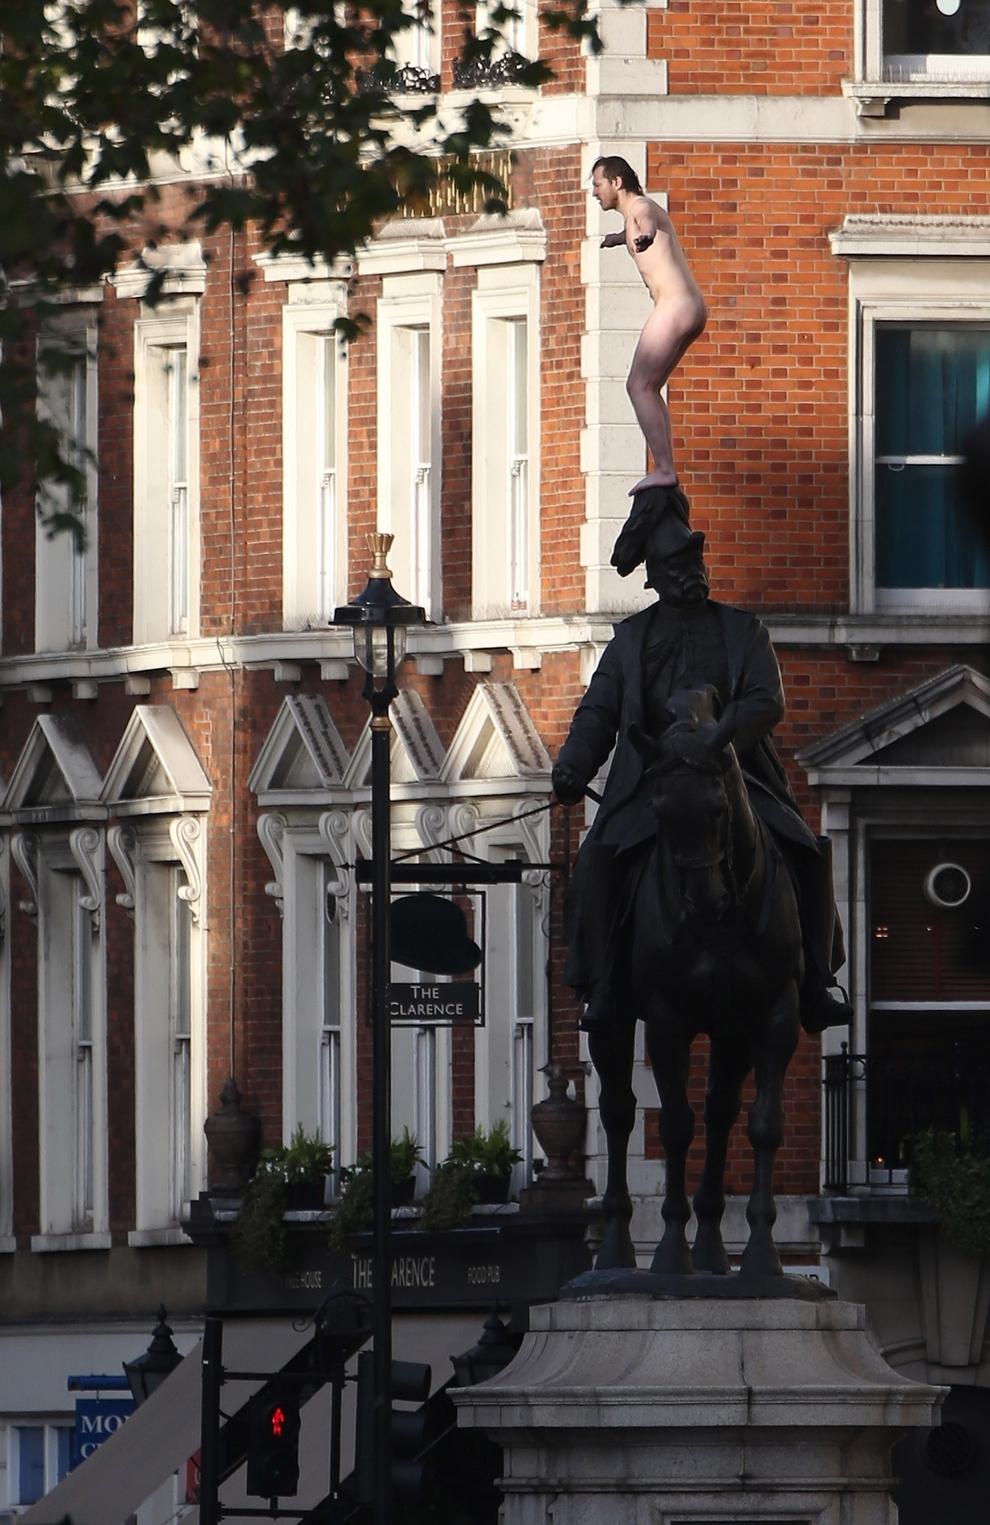 Naked Man Brings London to A Halt